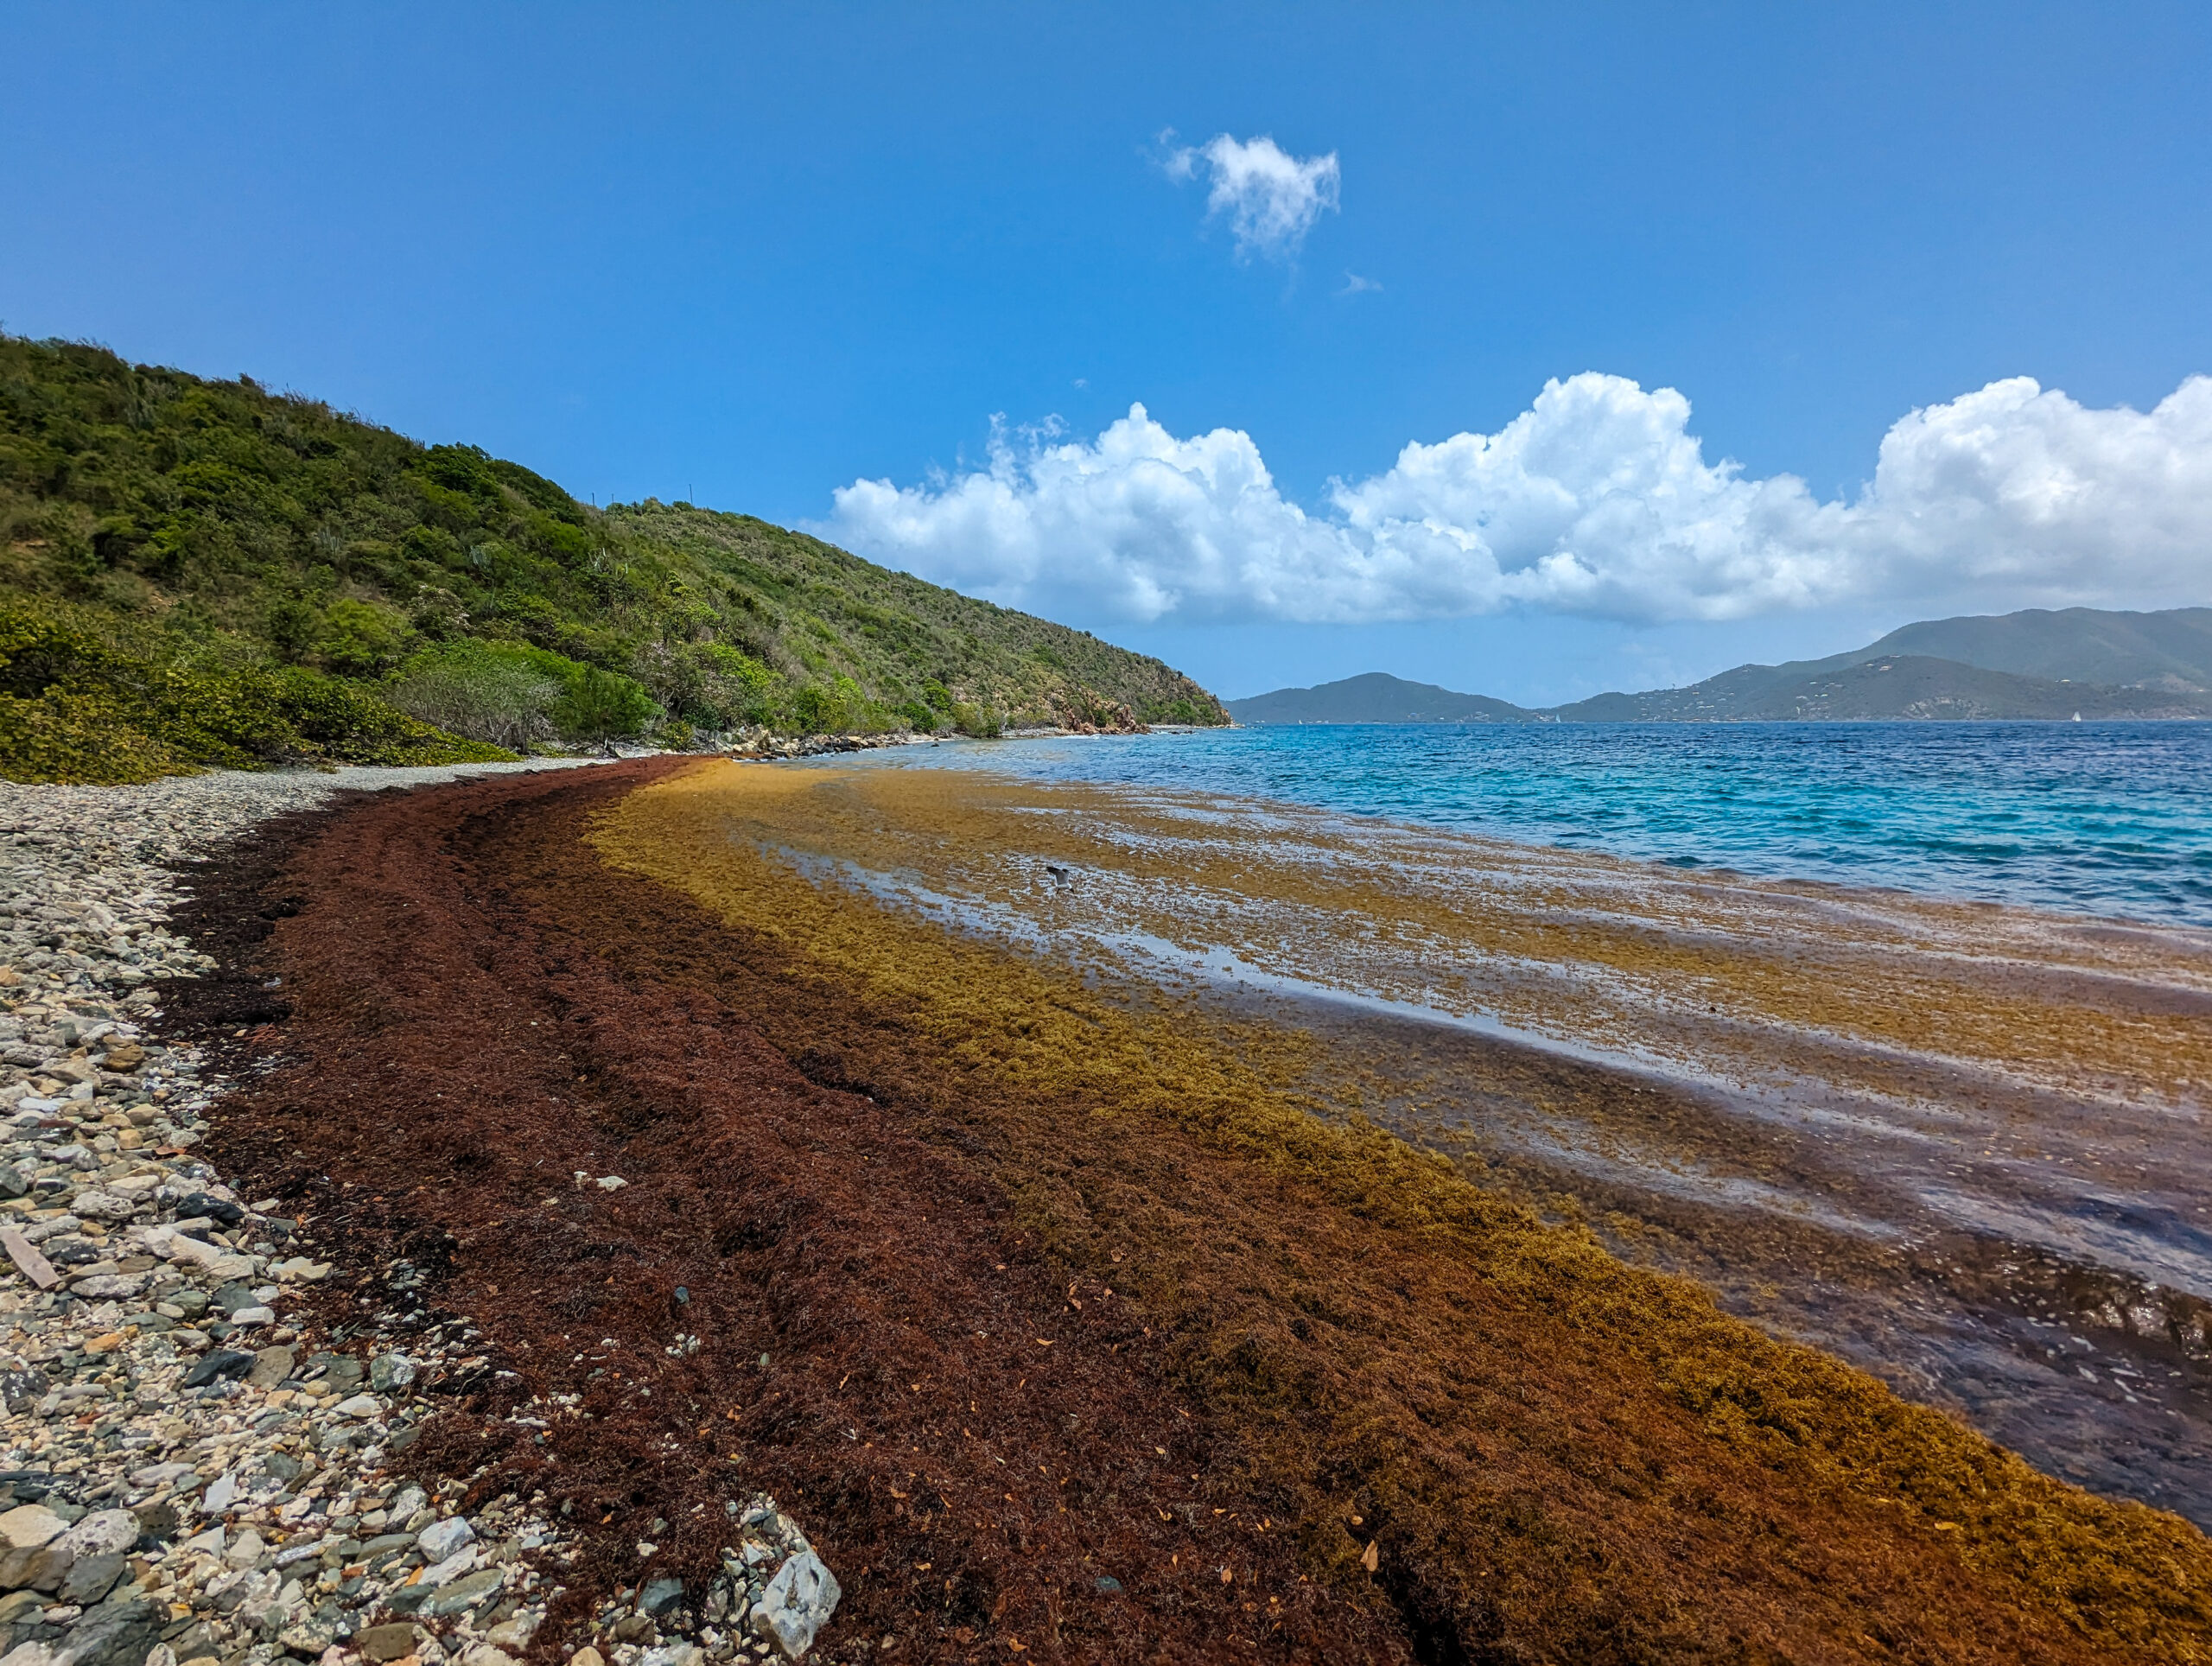 Virgin Islands National Park – Saint John, USVI